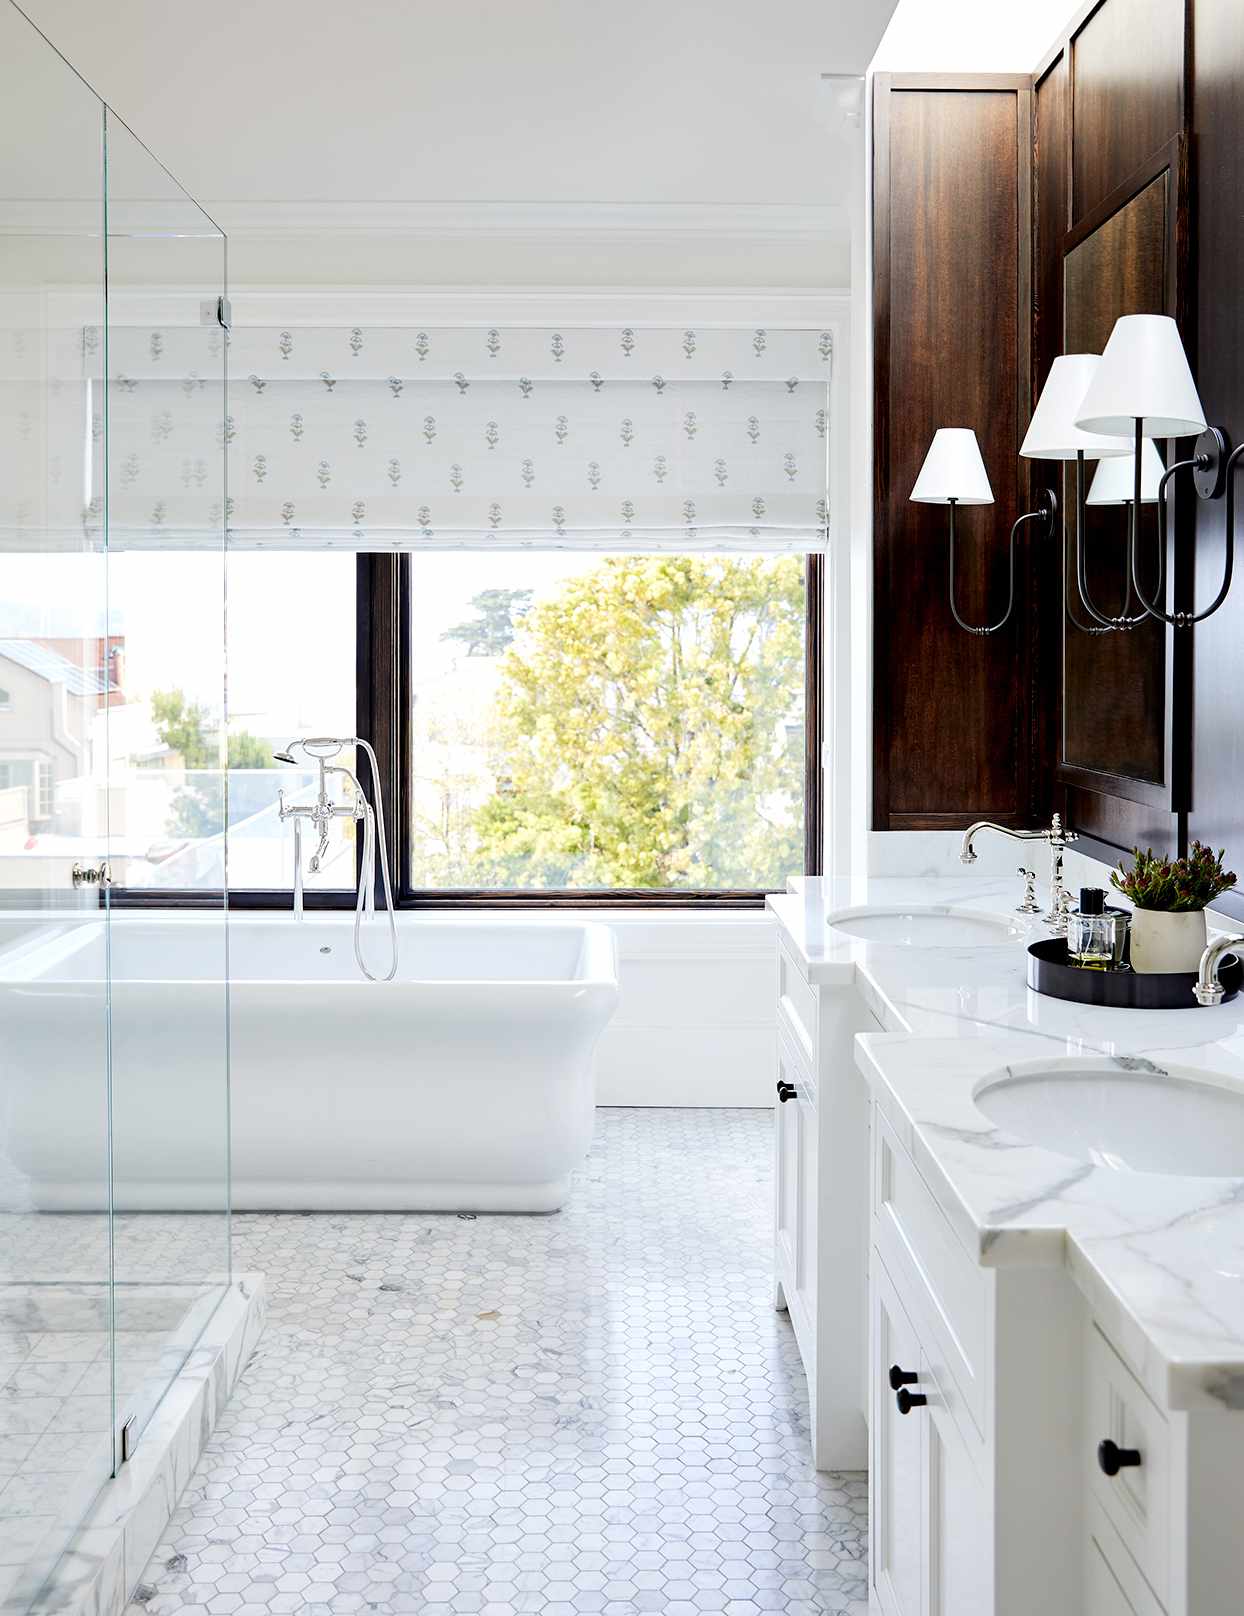 Details about   Industrial towel rail Bathroom towel holder Iron towel bar Bathroom décor 